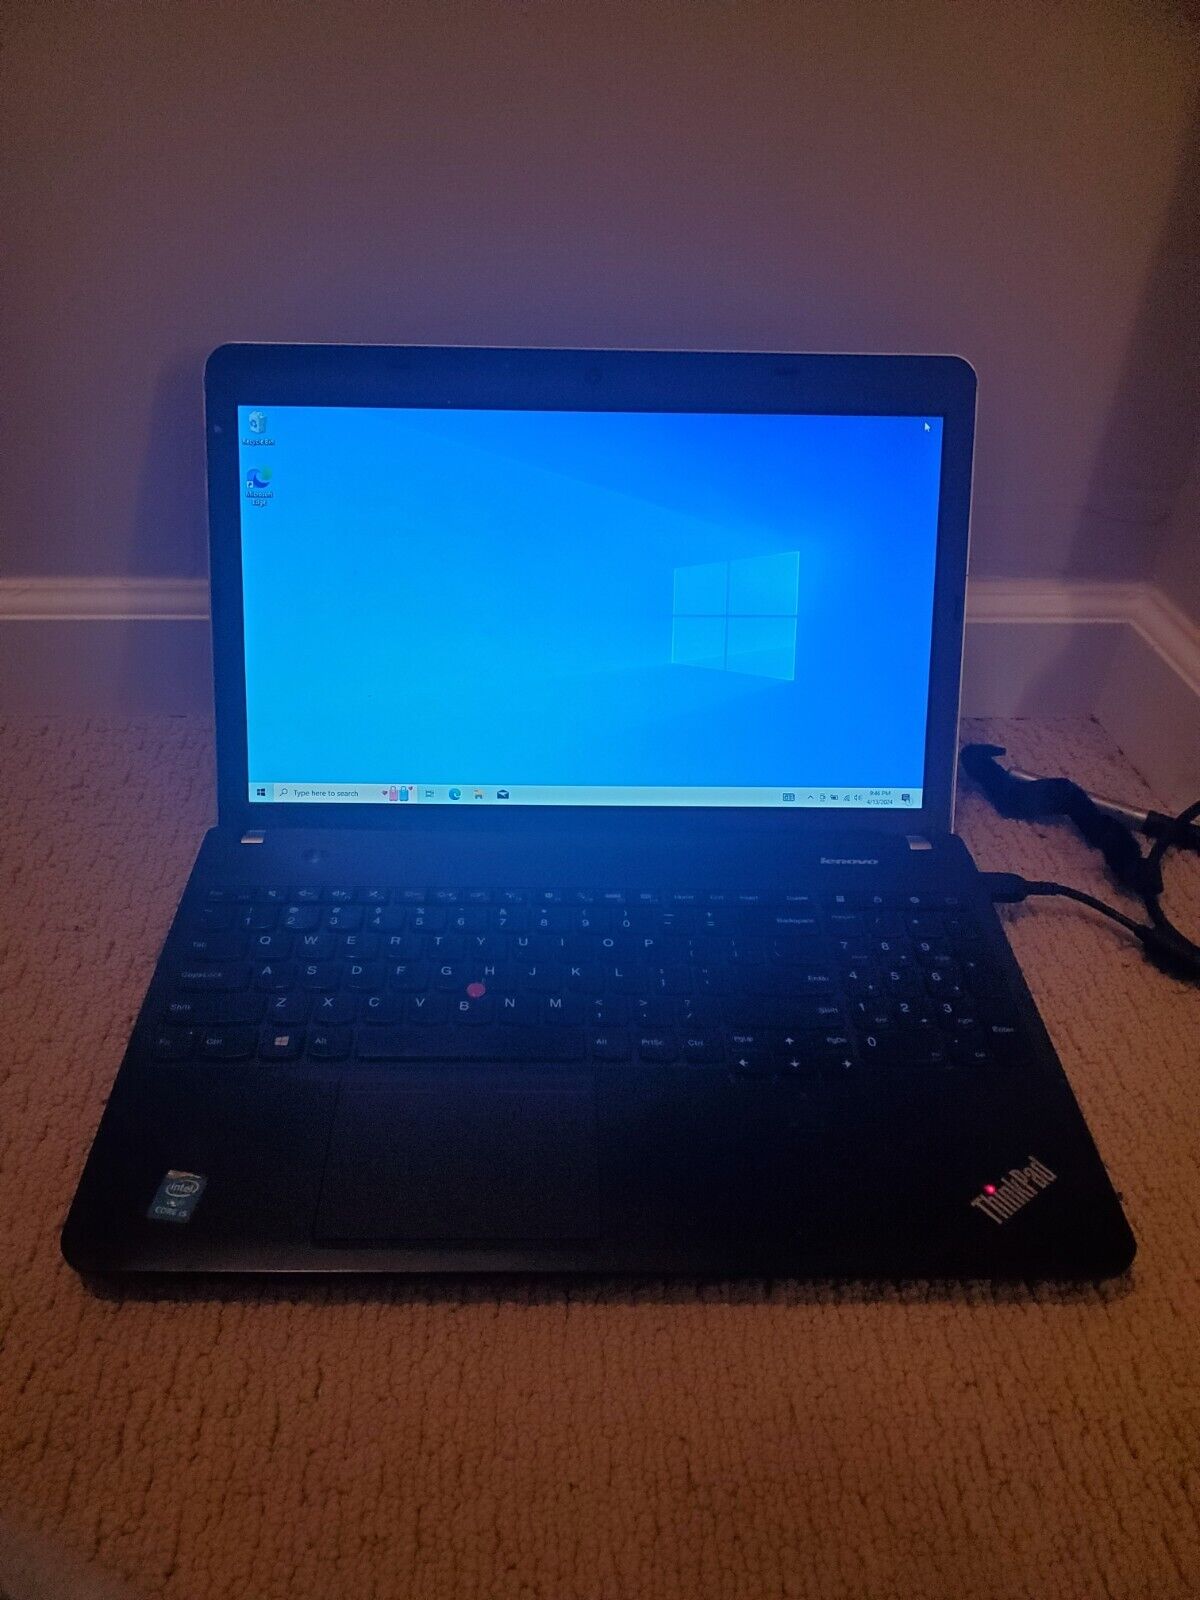 Lenovo ThinkPad E540 i5 4200U @ 2.5 GHz 500 GB 4 GB Windows 10 Home